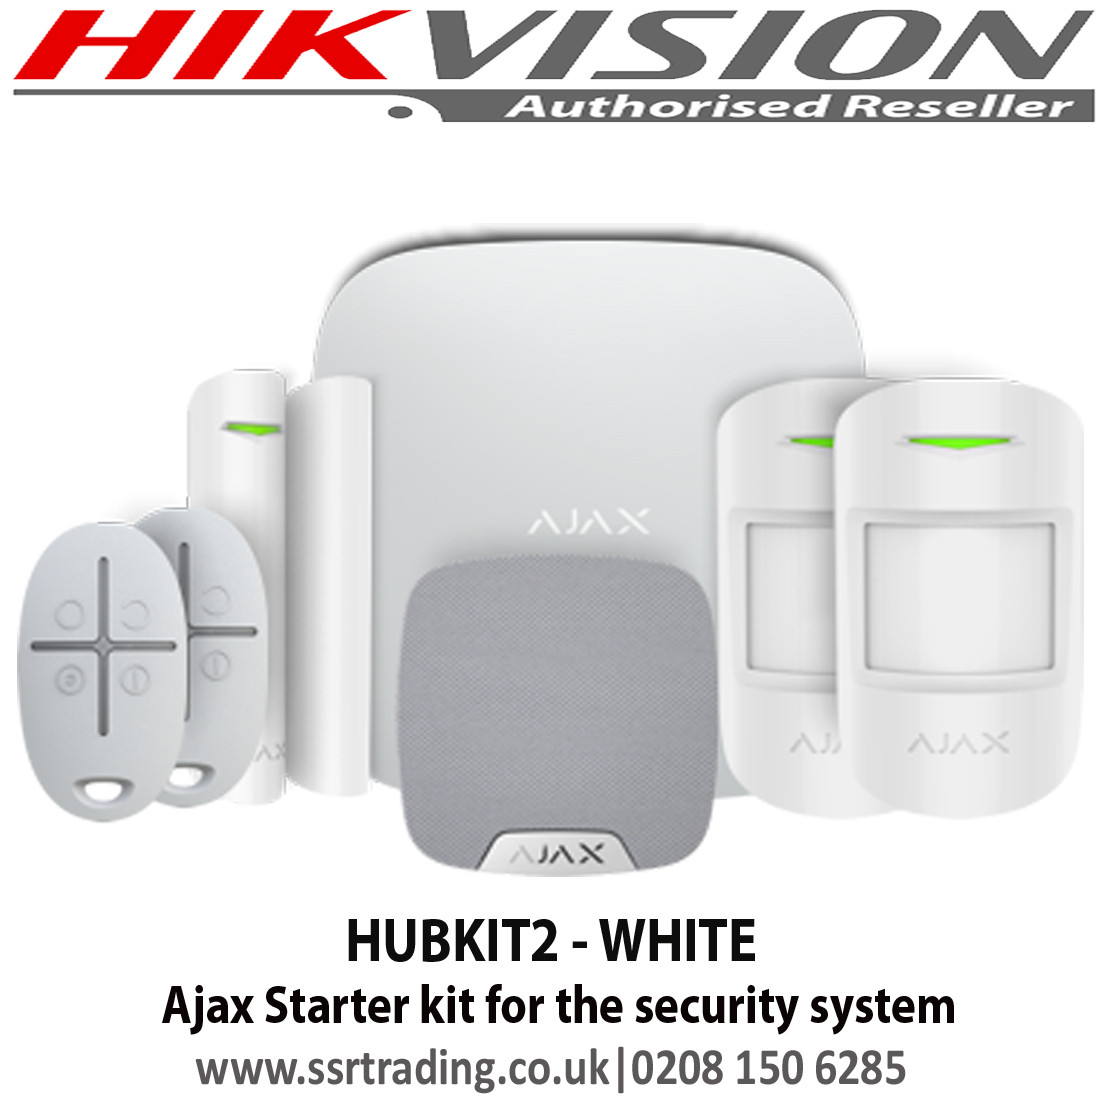 Ajax Starter kit for the Ajax security system - HUBKIT2 - WHITE